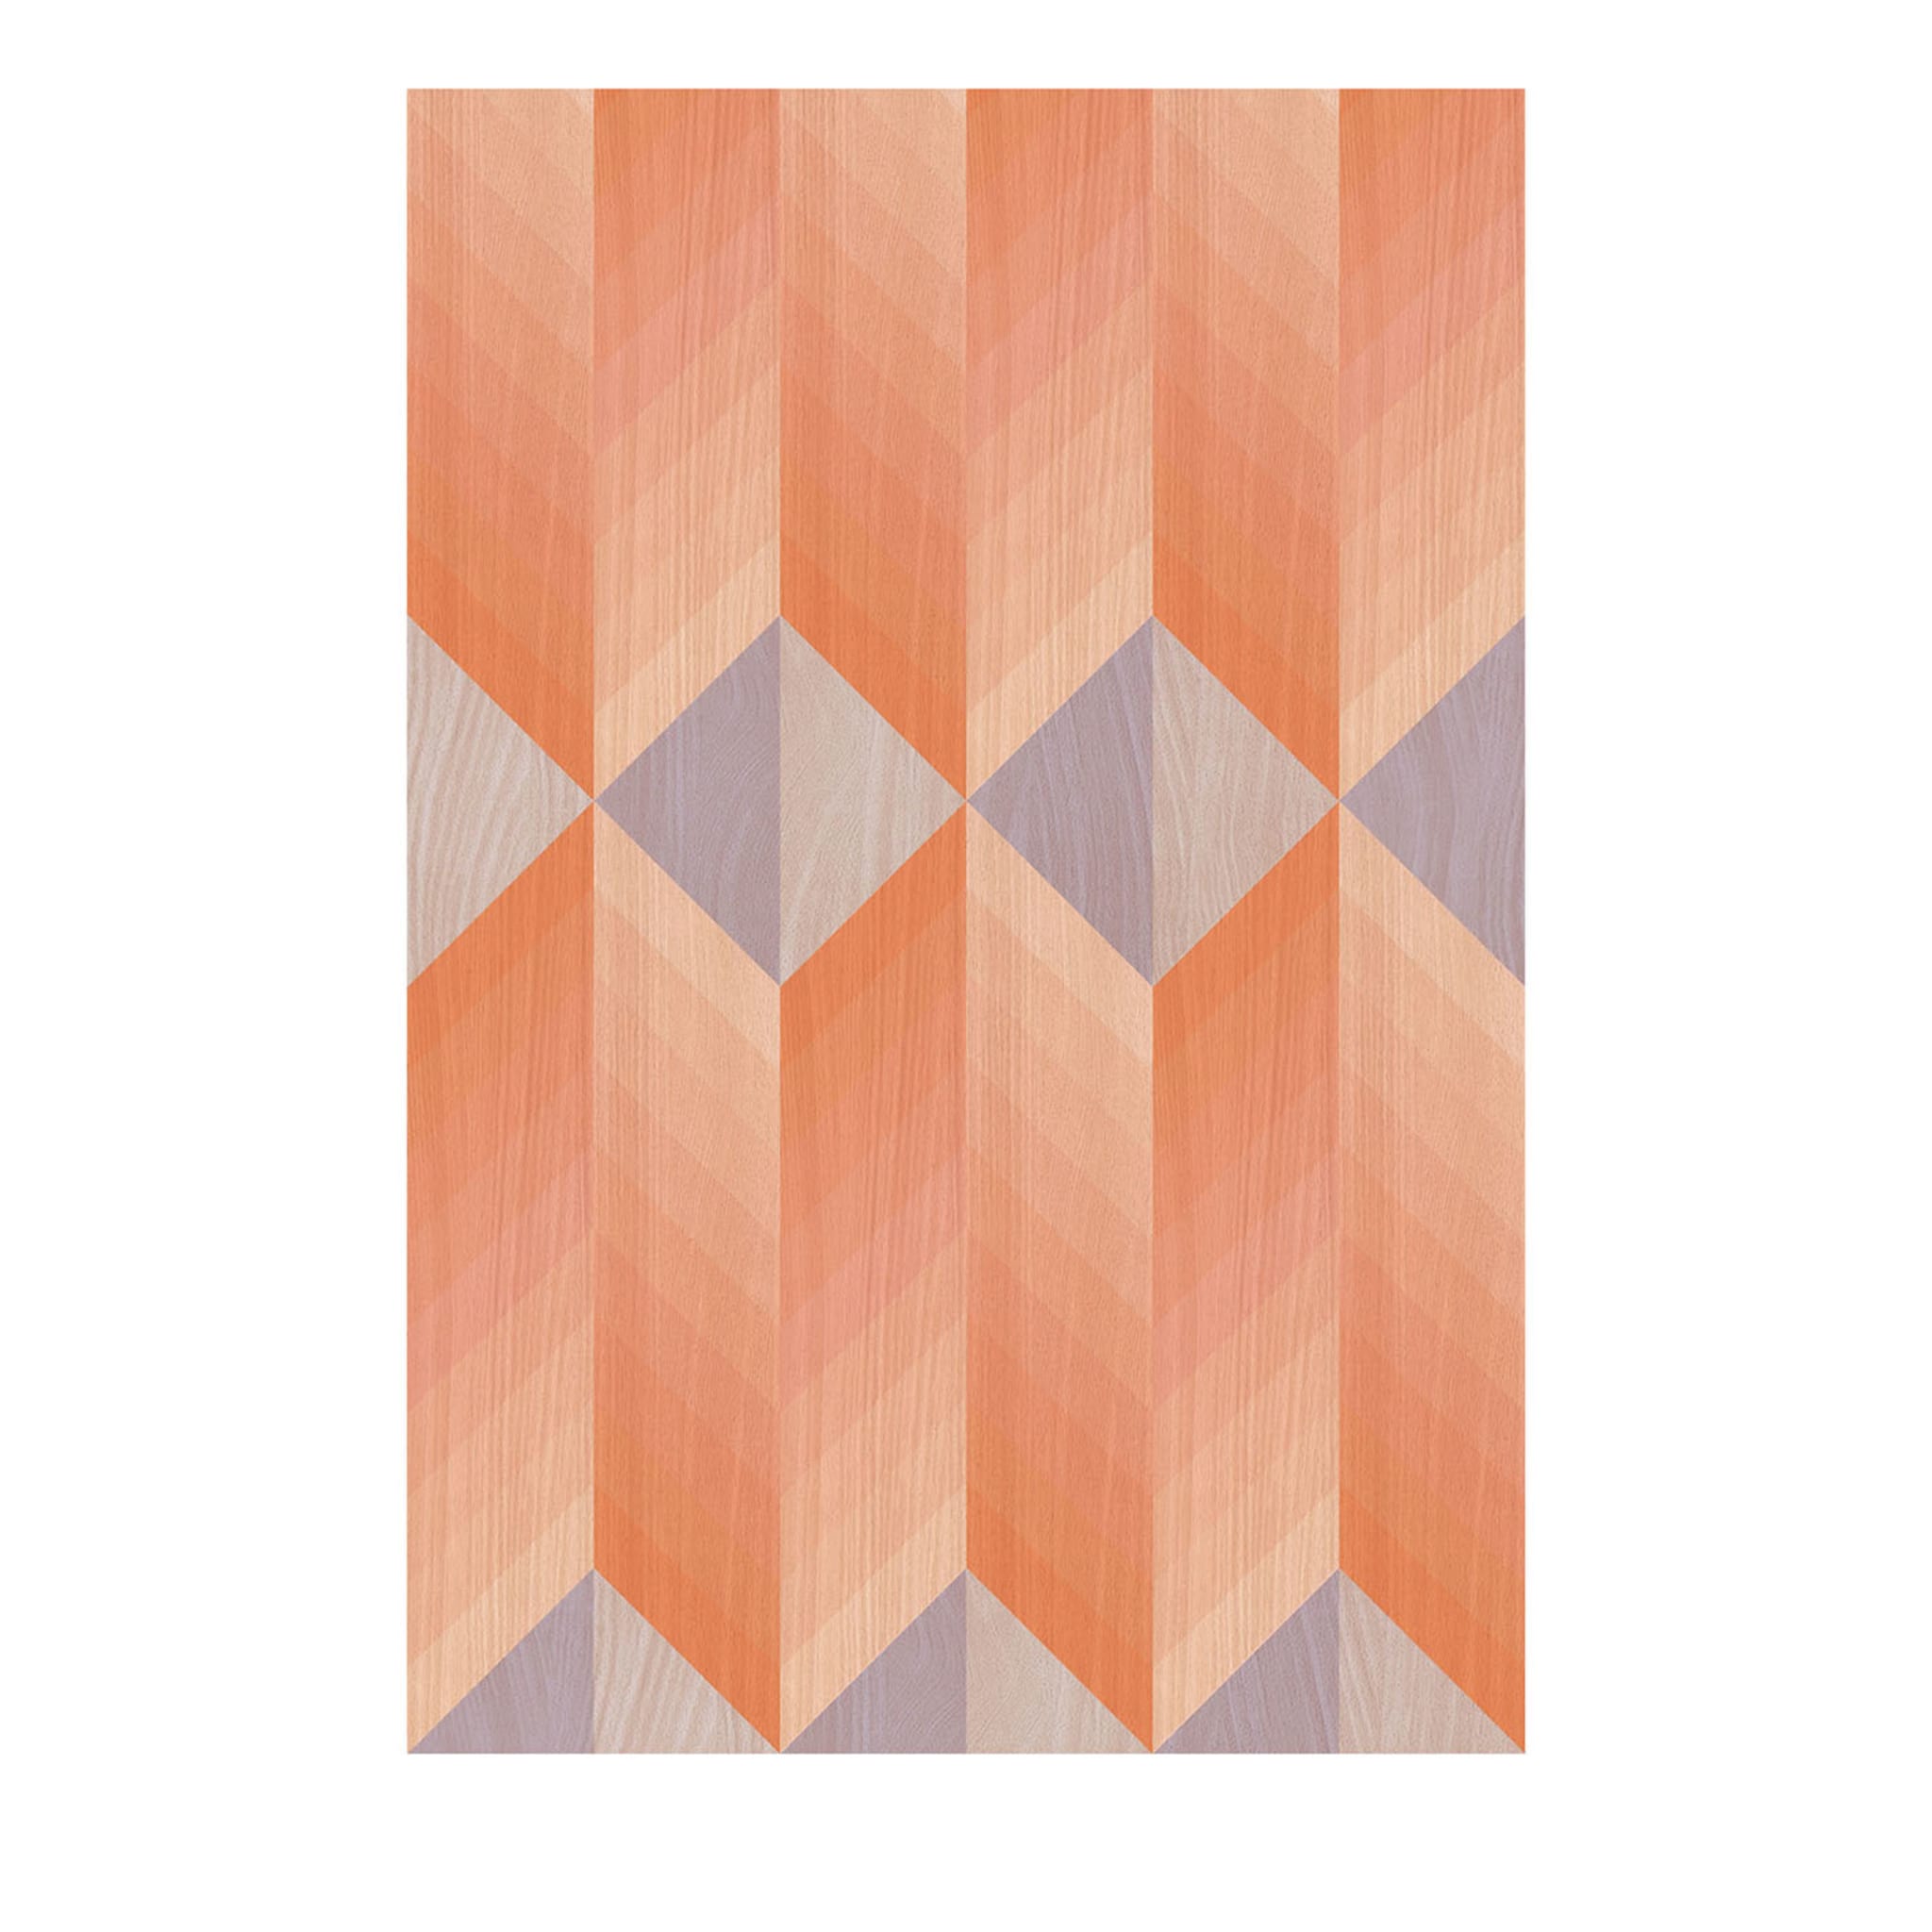 Geometry Triangles Orange Wallpaper - Main view